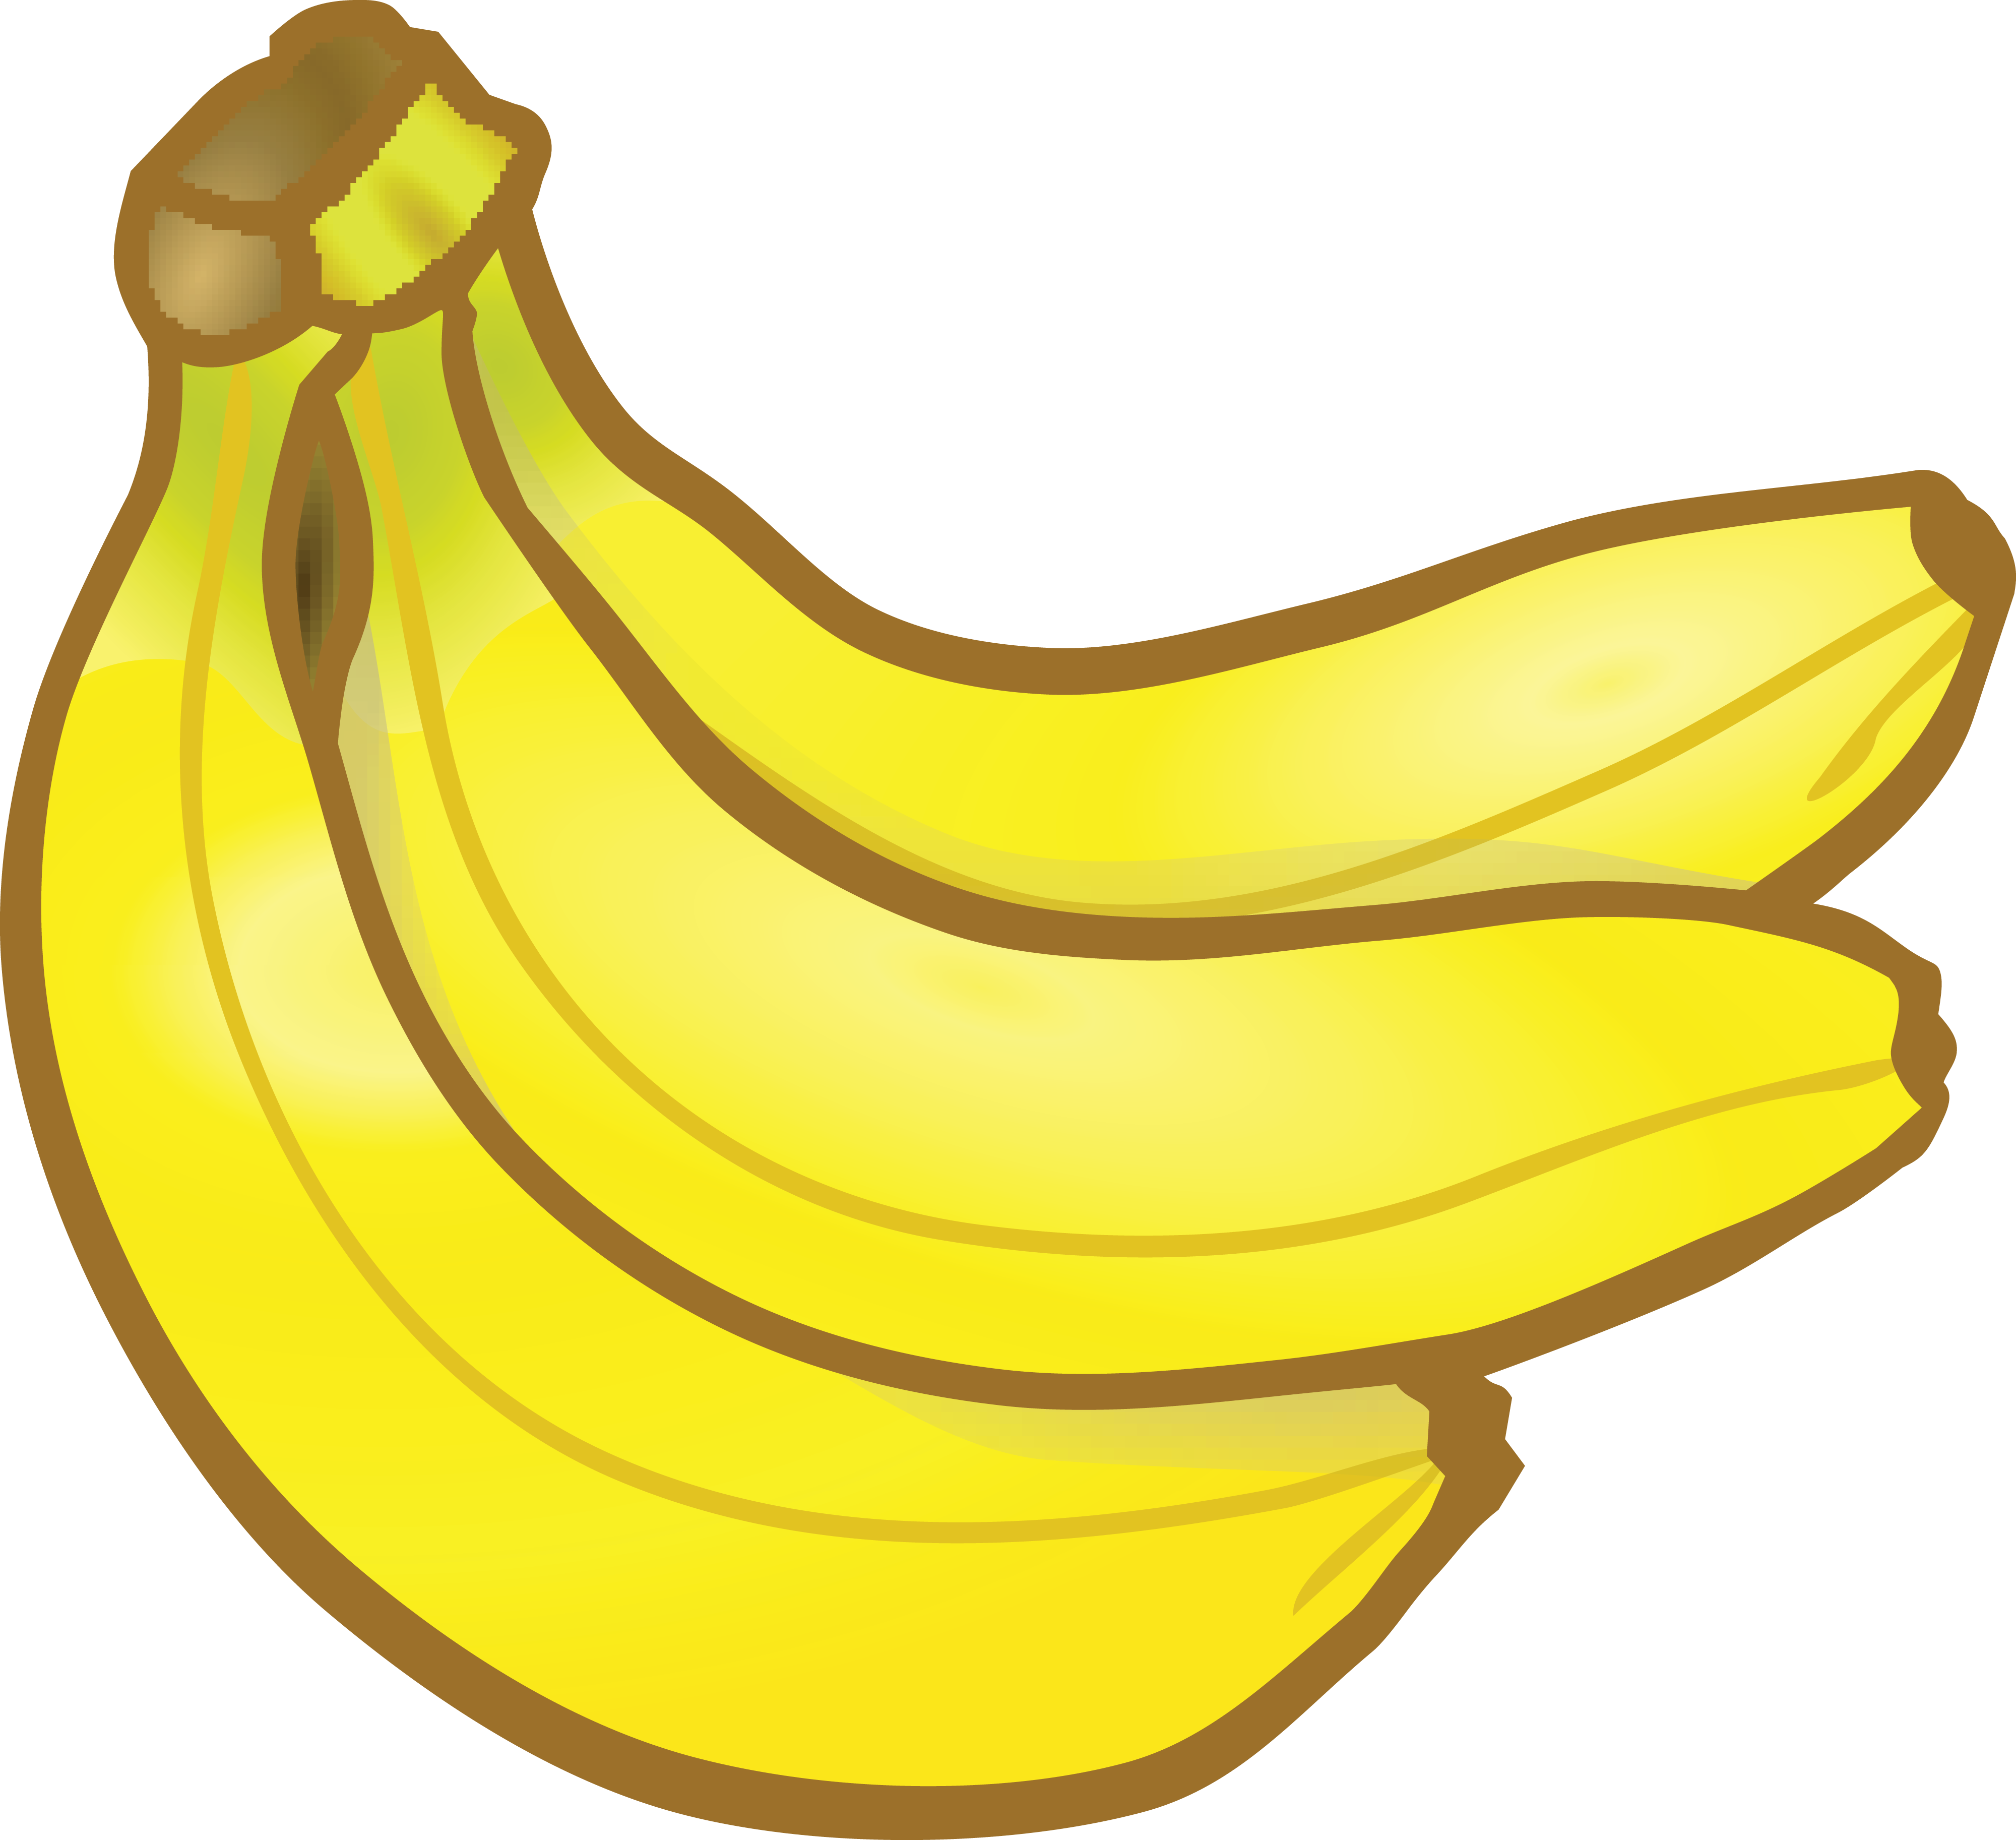 HD Free Clipart Of A Banana